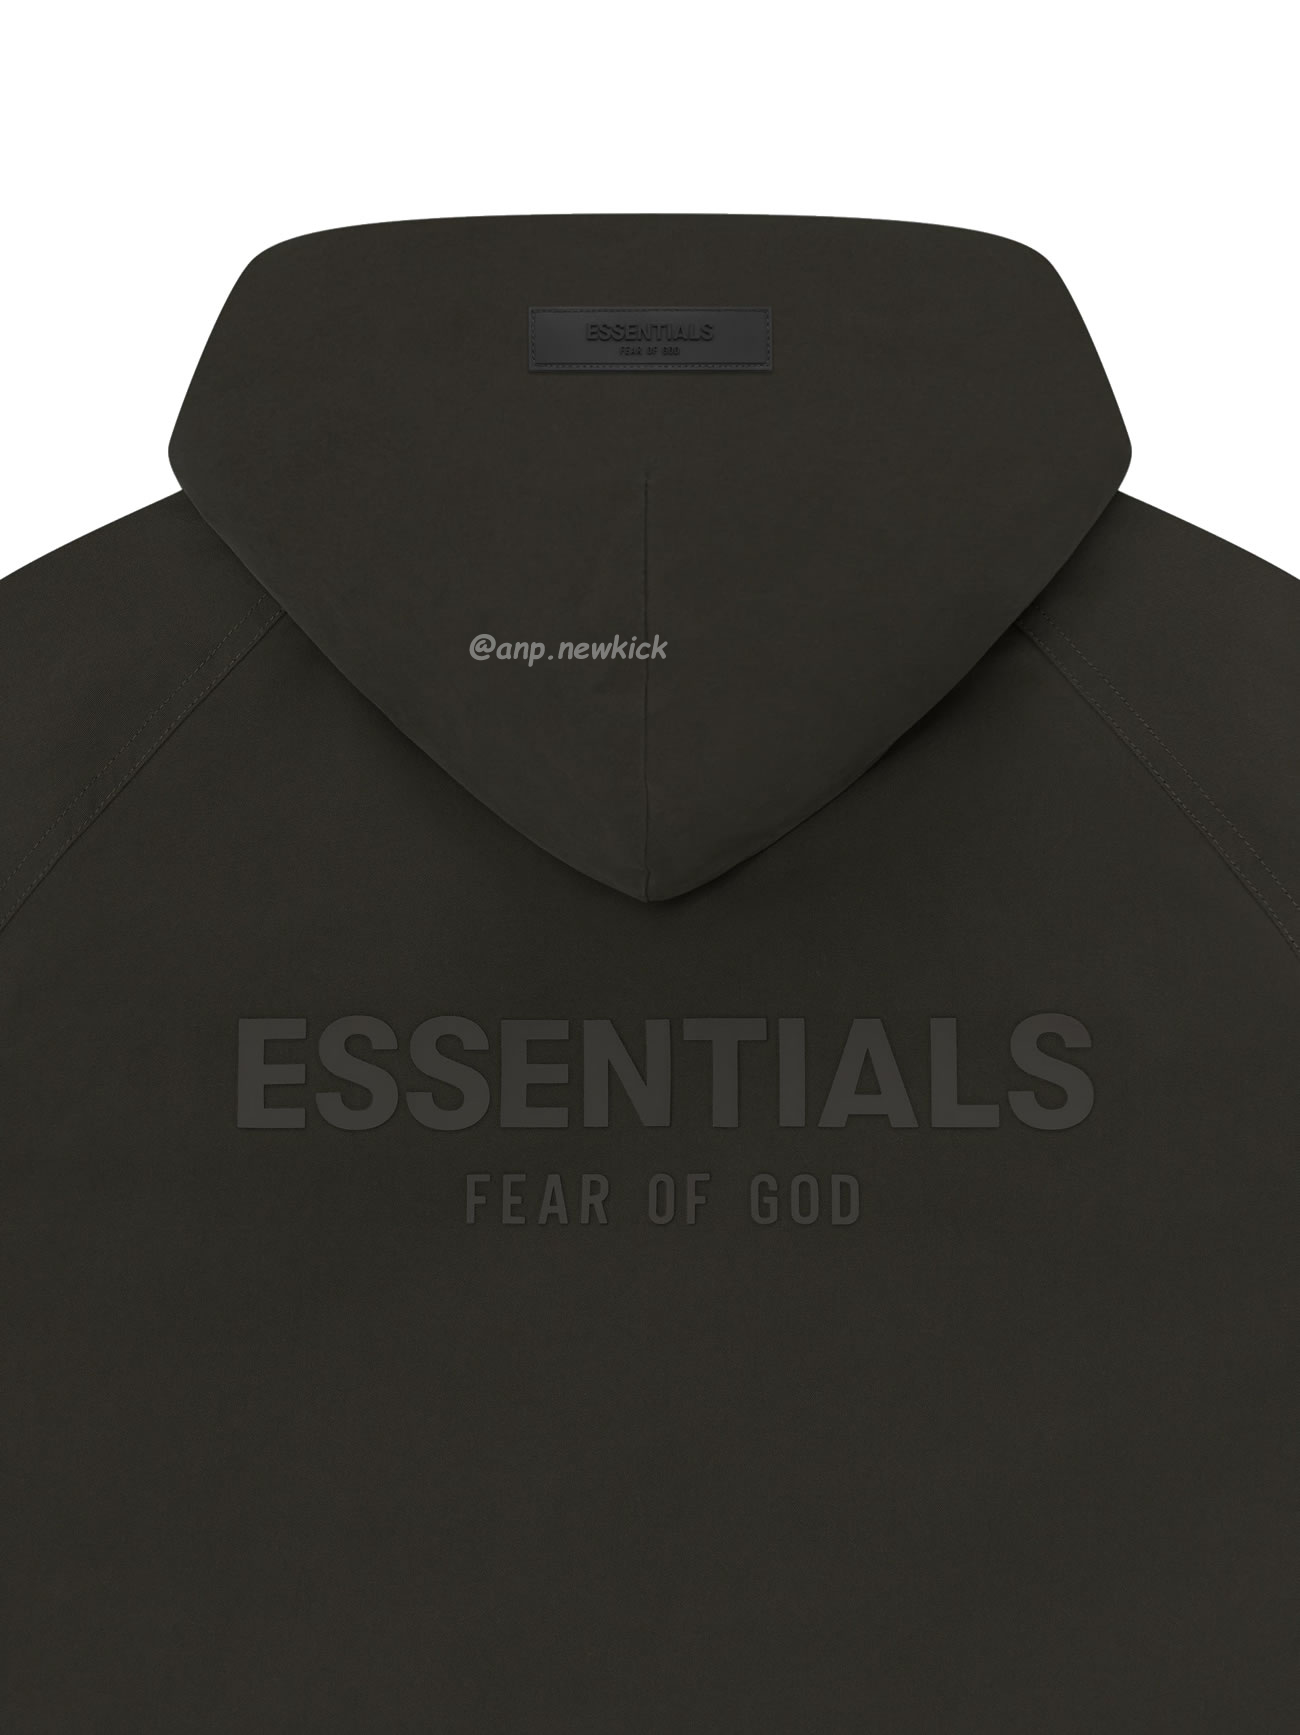 Fear Of God Essentials Fog 23fw Zipper Hooded Cotton Jacket Brown Black Elephant White S Xl (3) - newkick.org